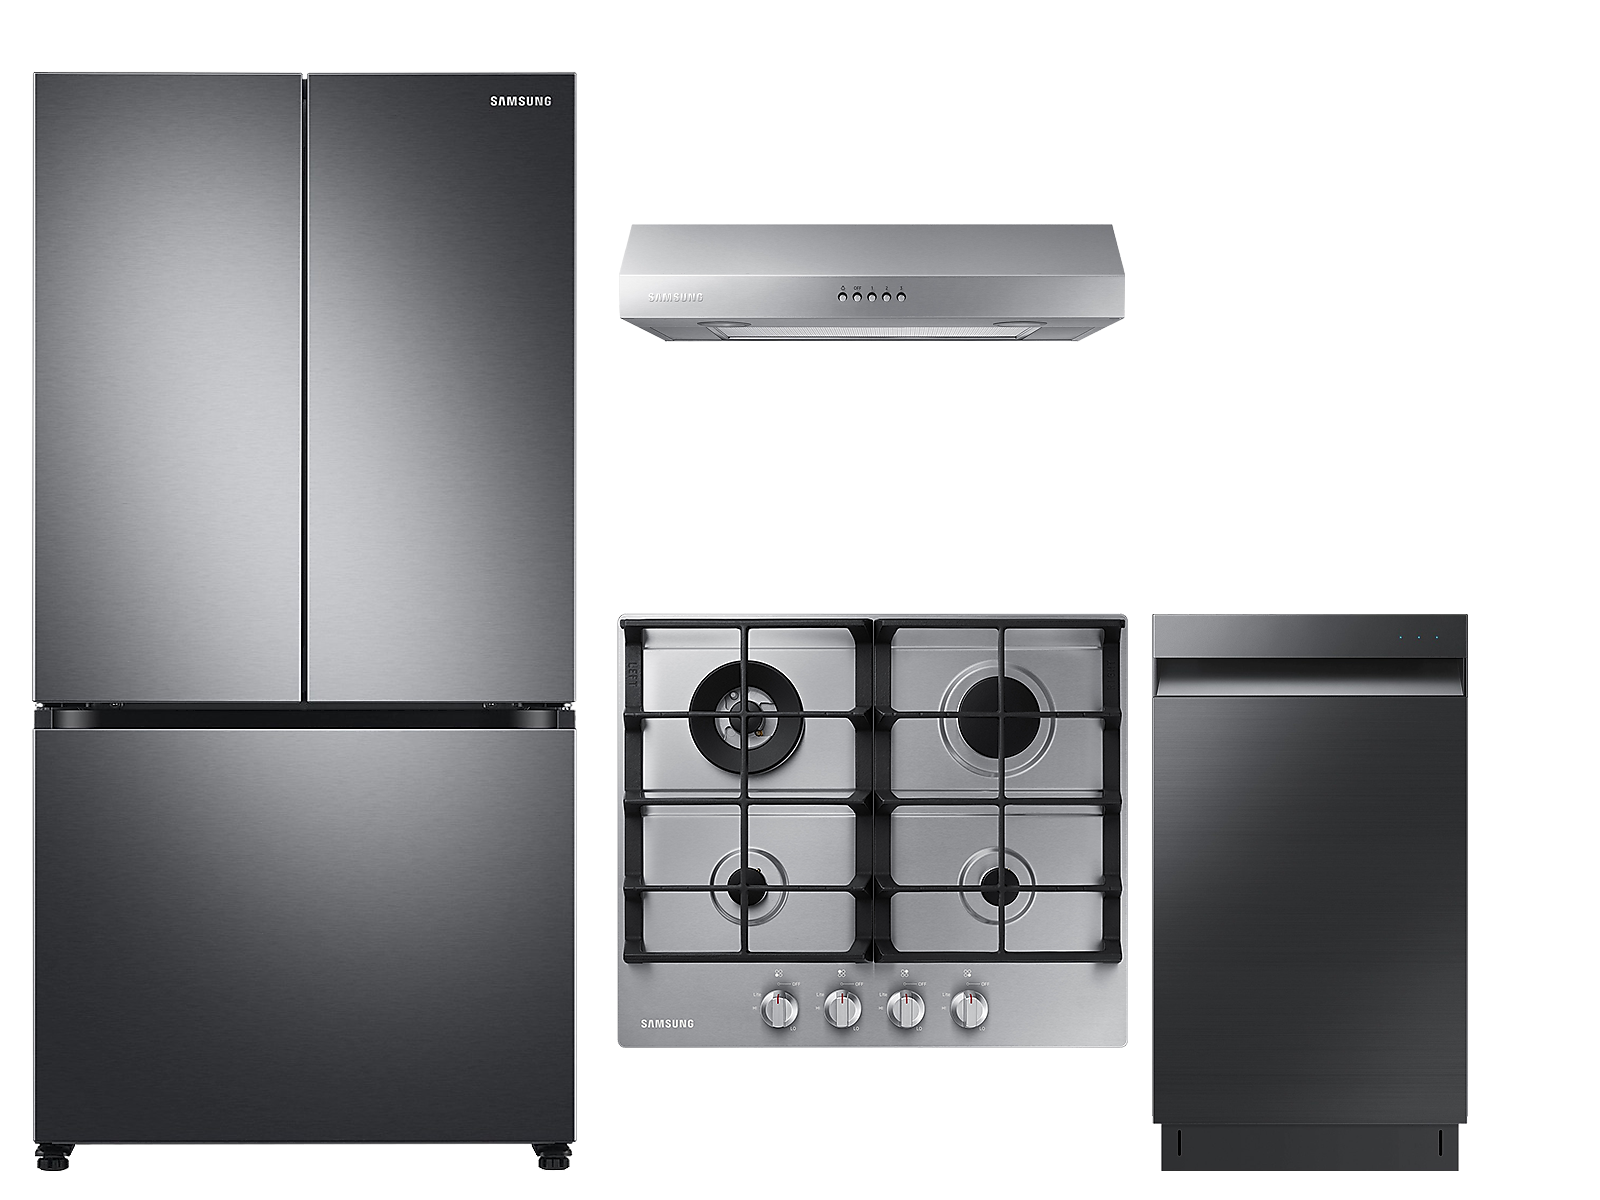 Samsung 3-Door French Door Refrigerator, gas cooktop, range hood and dishwaster small kitchen package(BNDL-1646291346790)